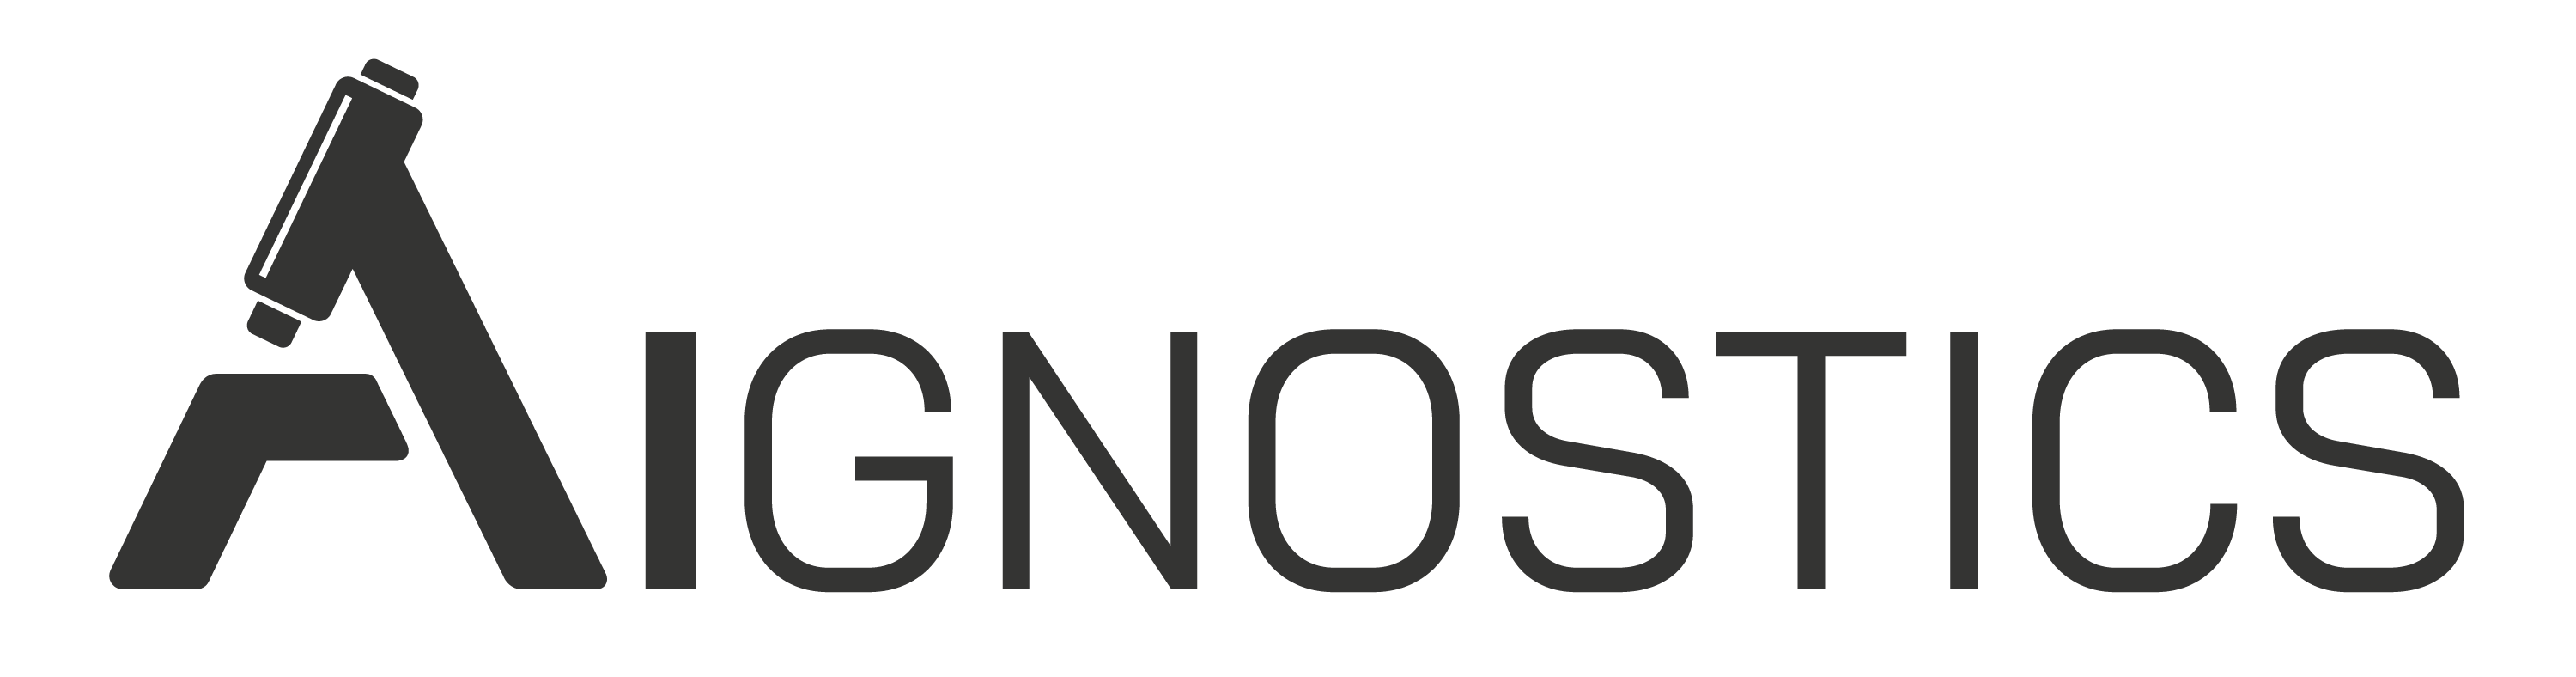 Aignostics GmbH